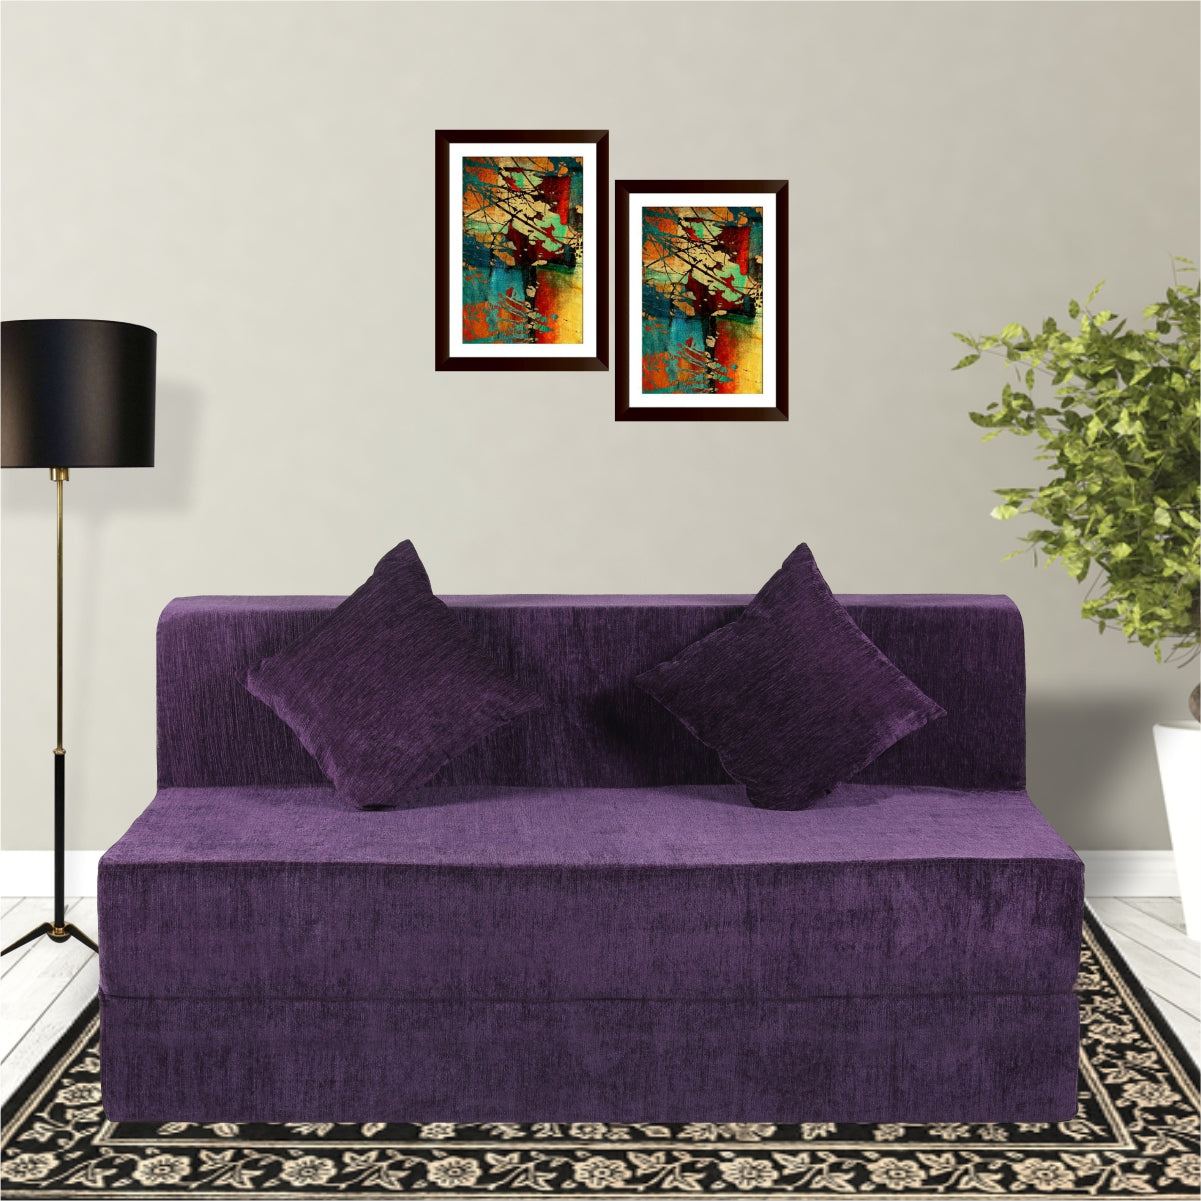 Seventh Heaven Purple Morphino Fabric 6×5 Sofa cum Bed with 2 Cushion